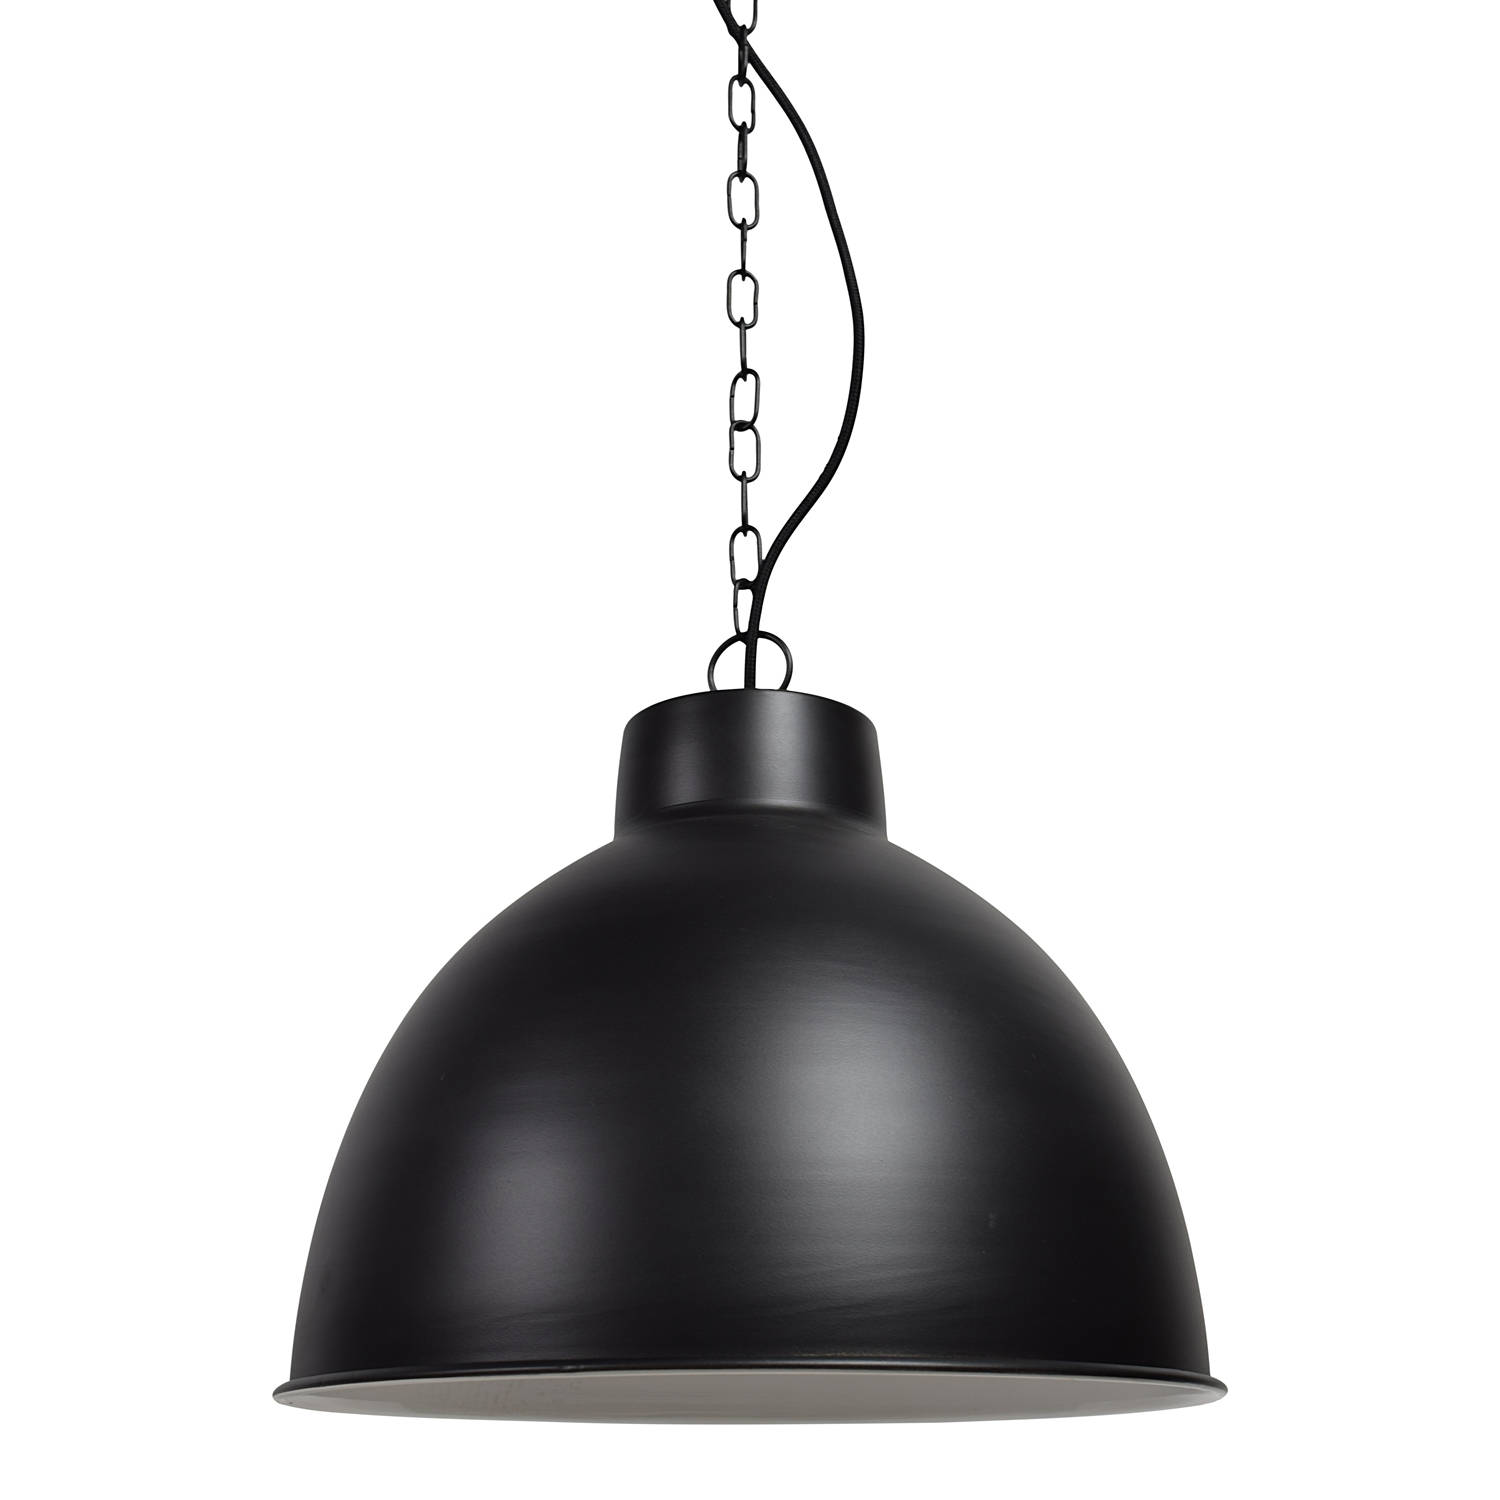 Urban interiors - rocky 40cm hanglamp - zwart